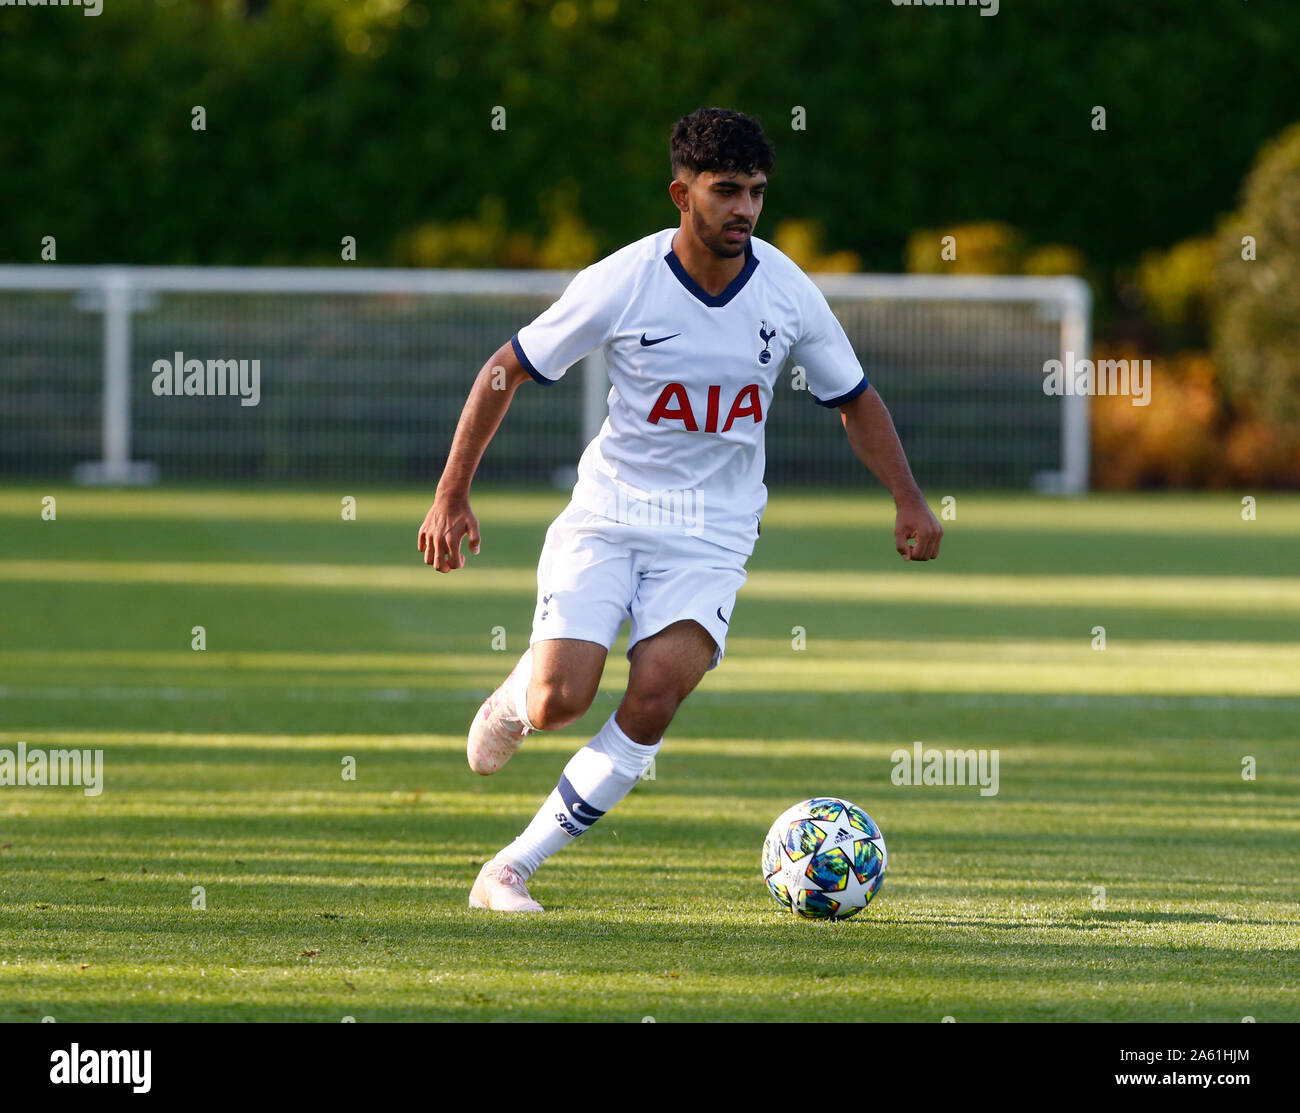 ENFIELD, ENGLAND. OCTOBER 22: Dilan Markanday of Tottenham Hotspur  during UAFA Youth League between Tottenham Hotspur and Crvena zvezda ( Red Star Be Stock Photo